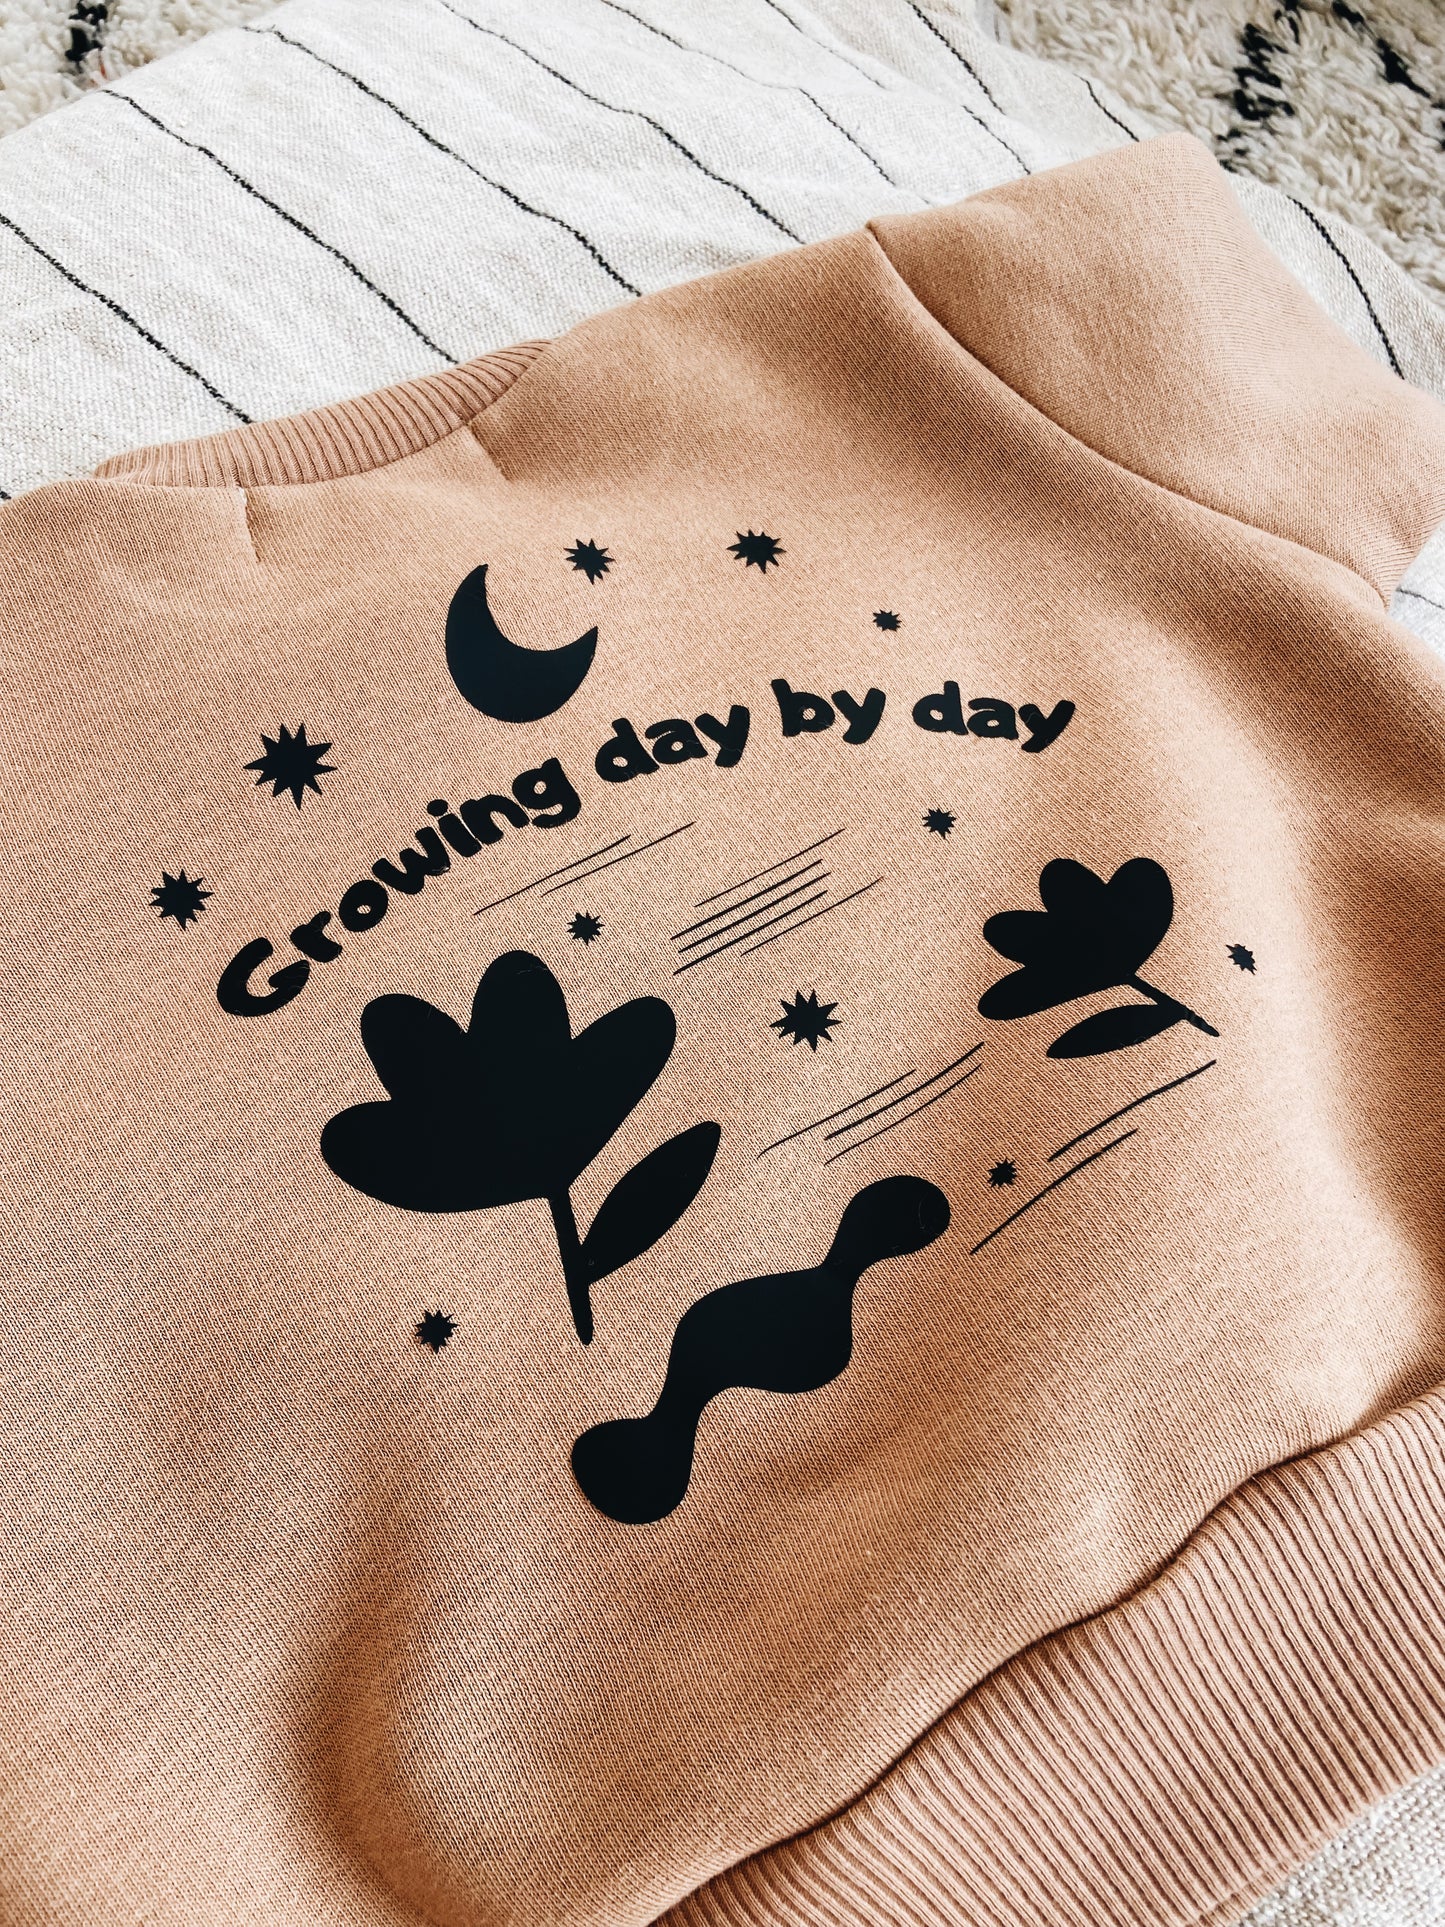 Sweatshirt Hazelnut "Growing day by day"